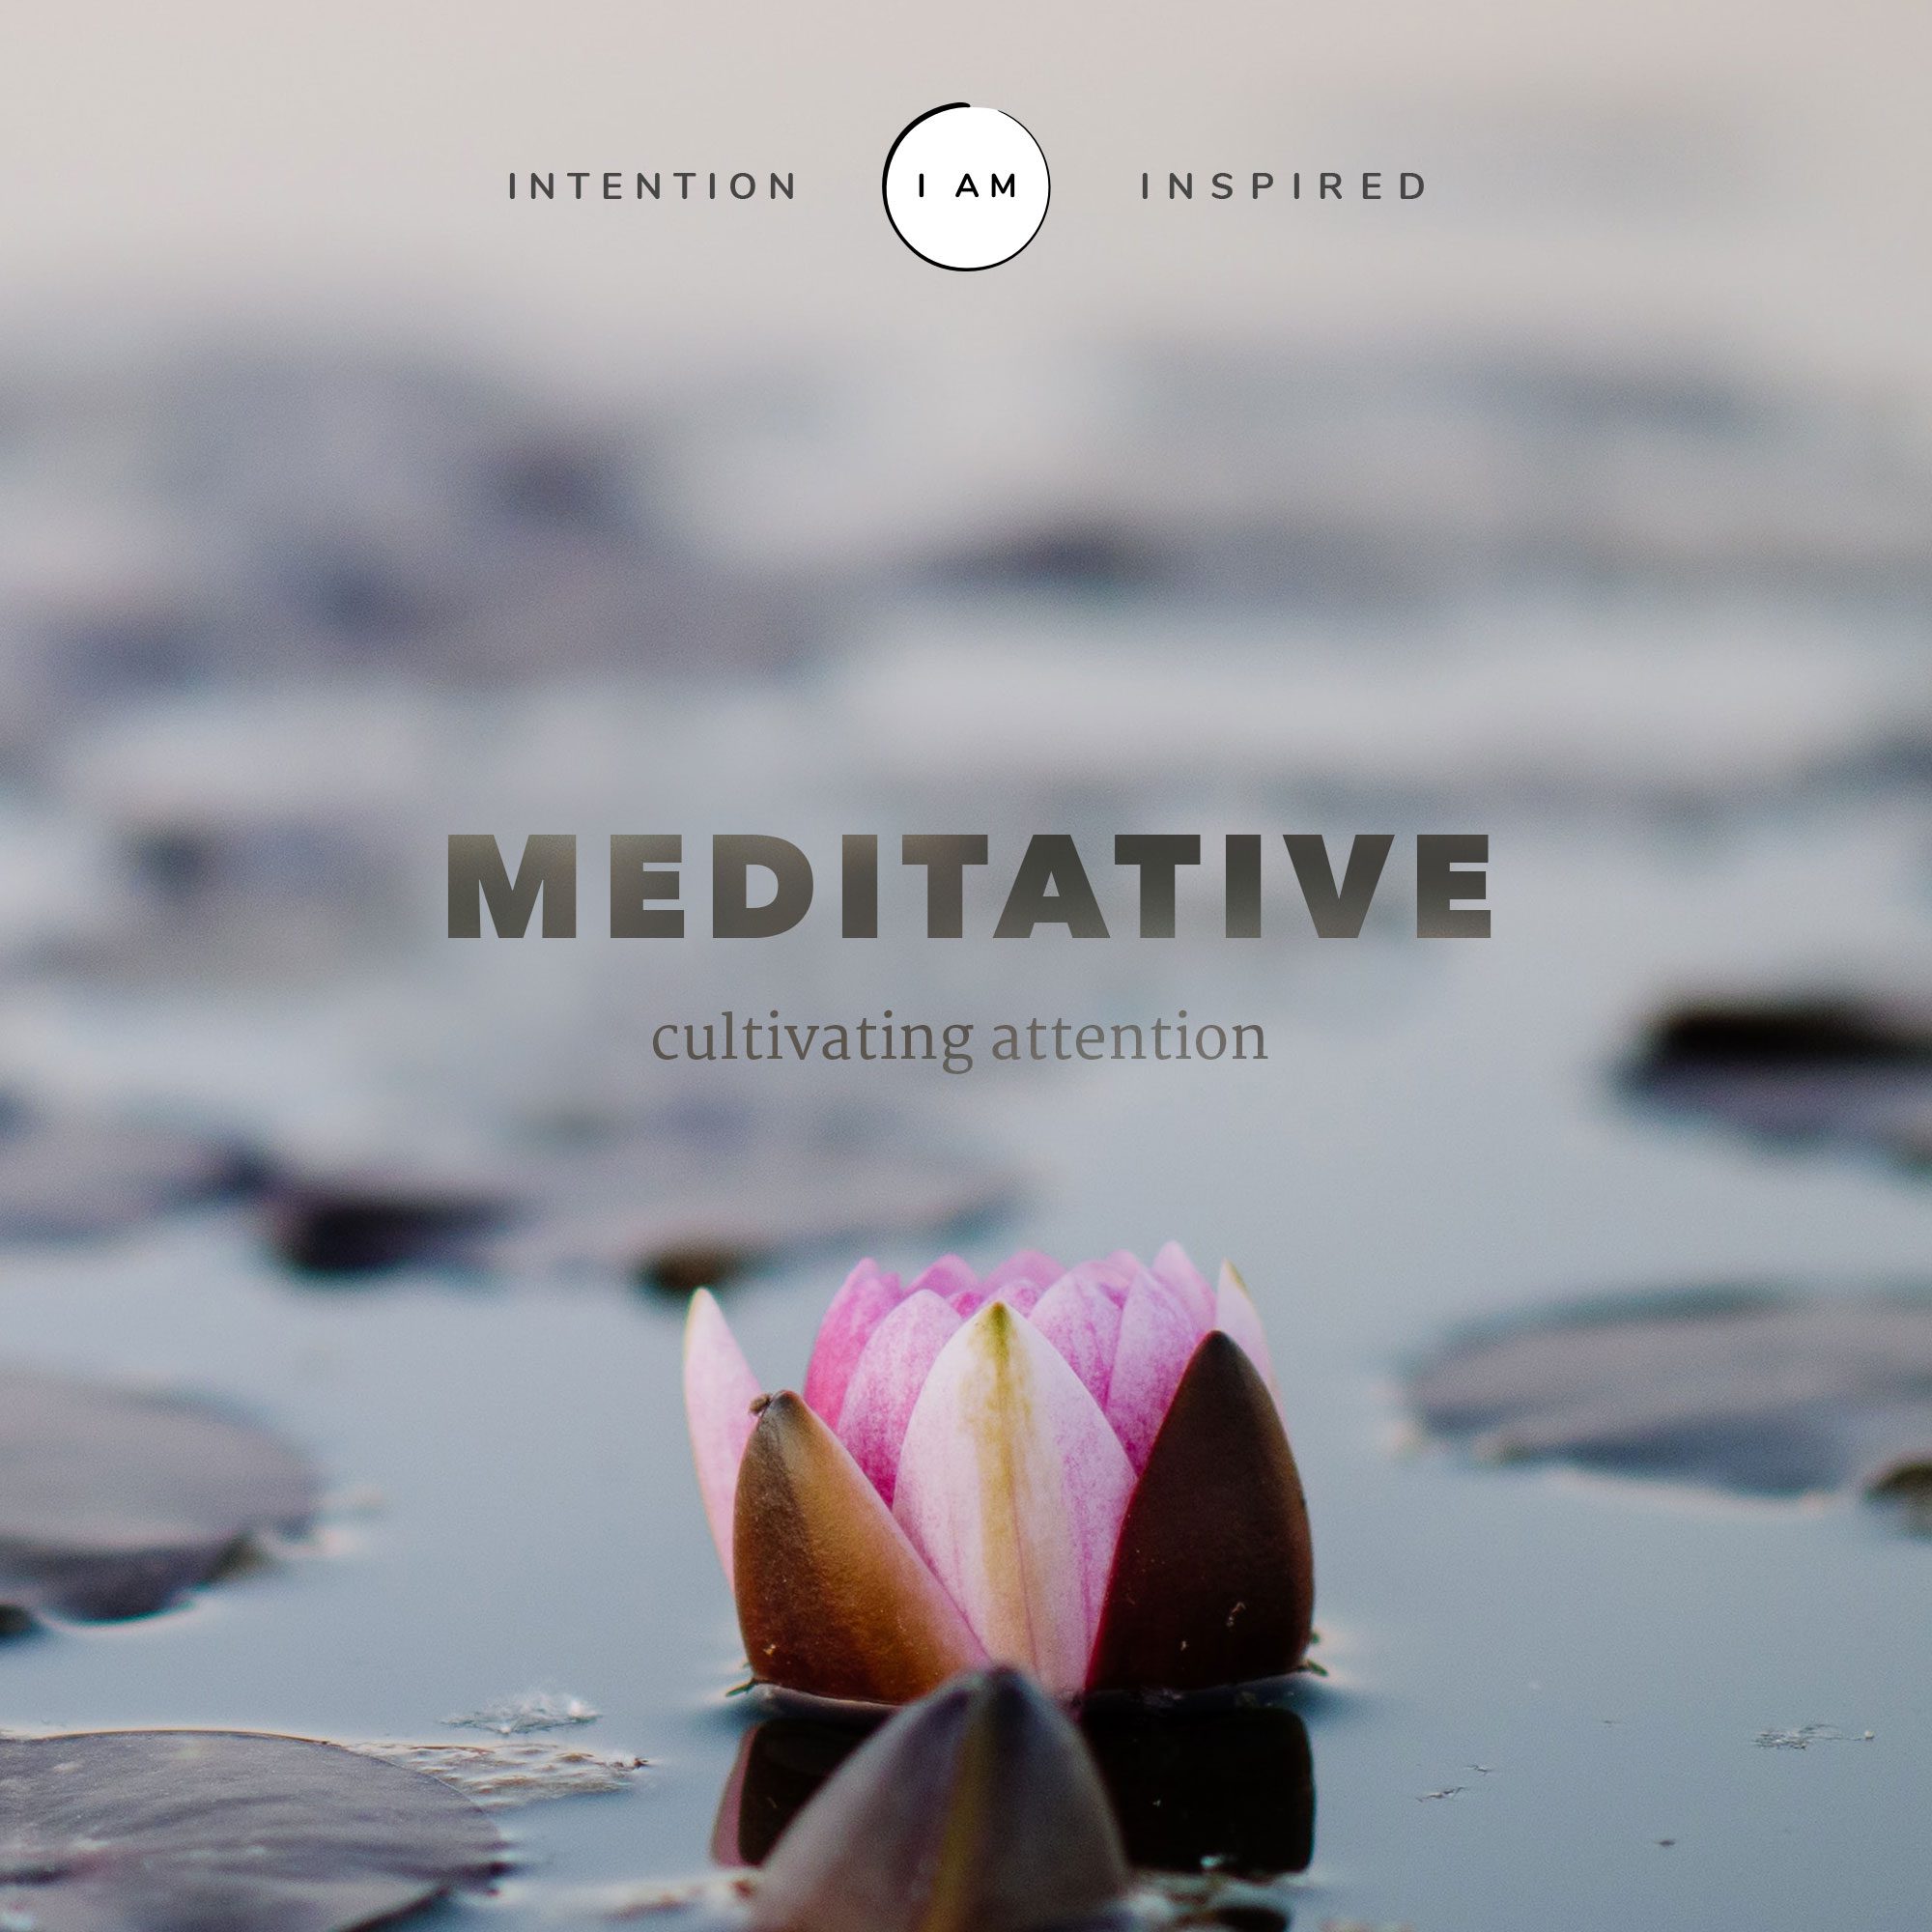 MEDITATIVE – cultivating attention